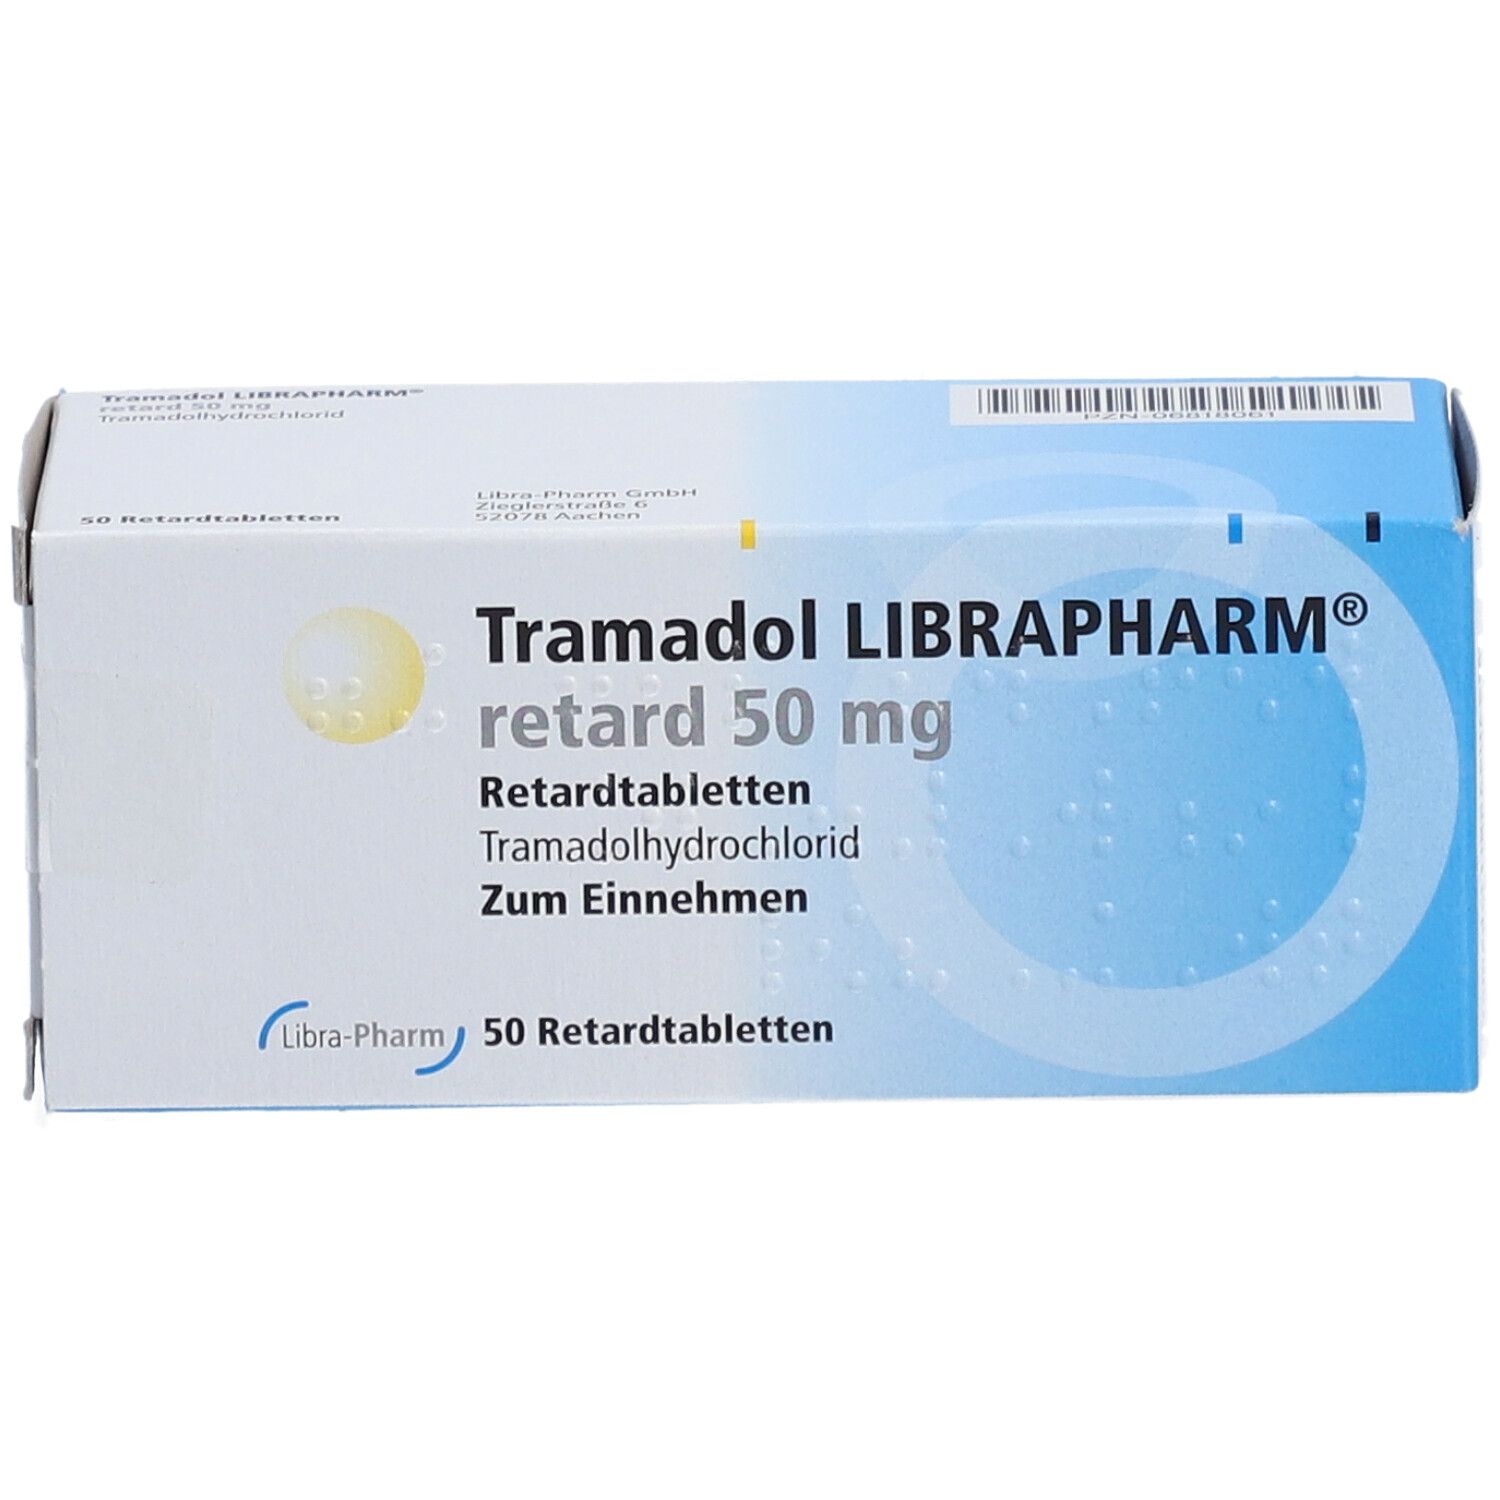 Tramadol LIBRAPHARM® retard 50 mg